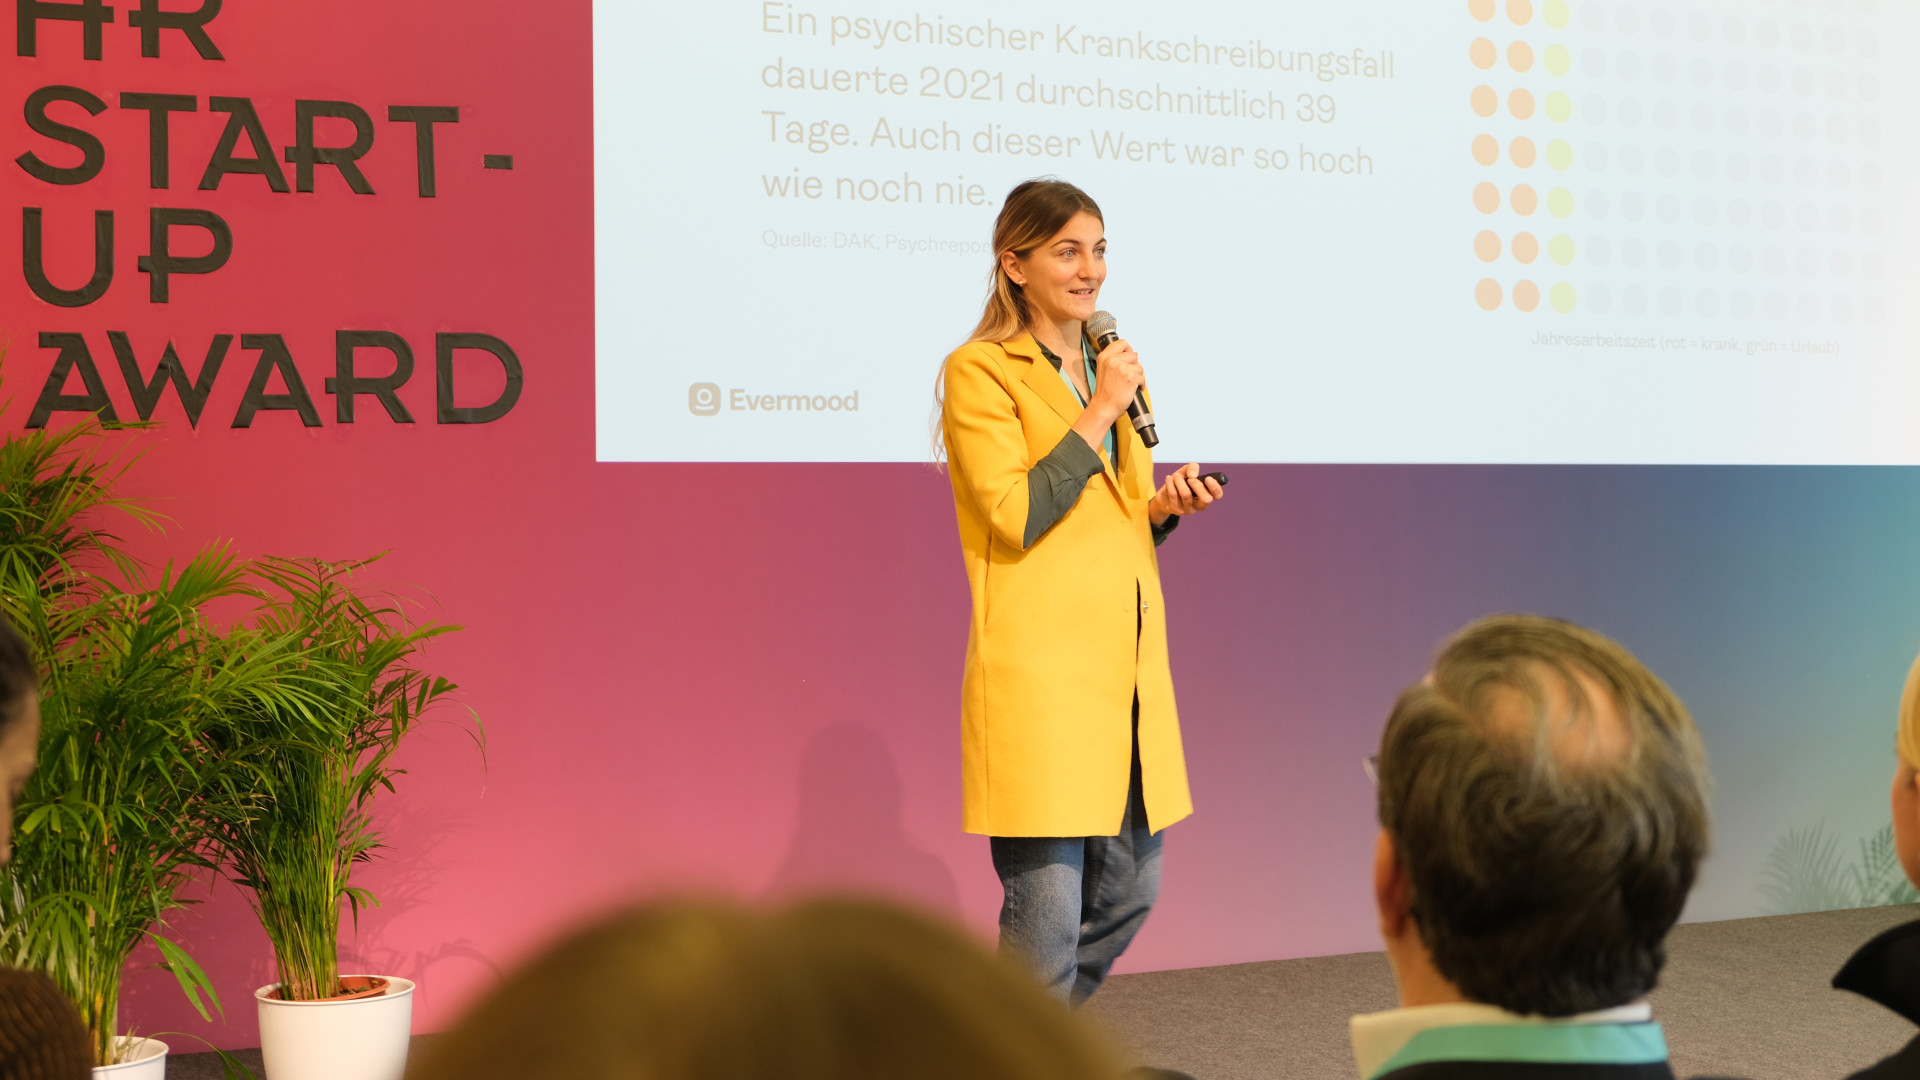 Lara von Petersdorff-Campen, founder of Evermood, on stage at the HR Start-up Award 2022.